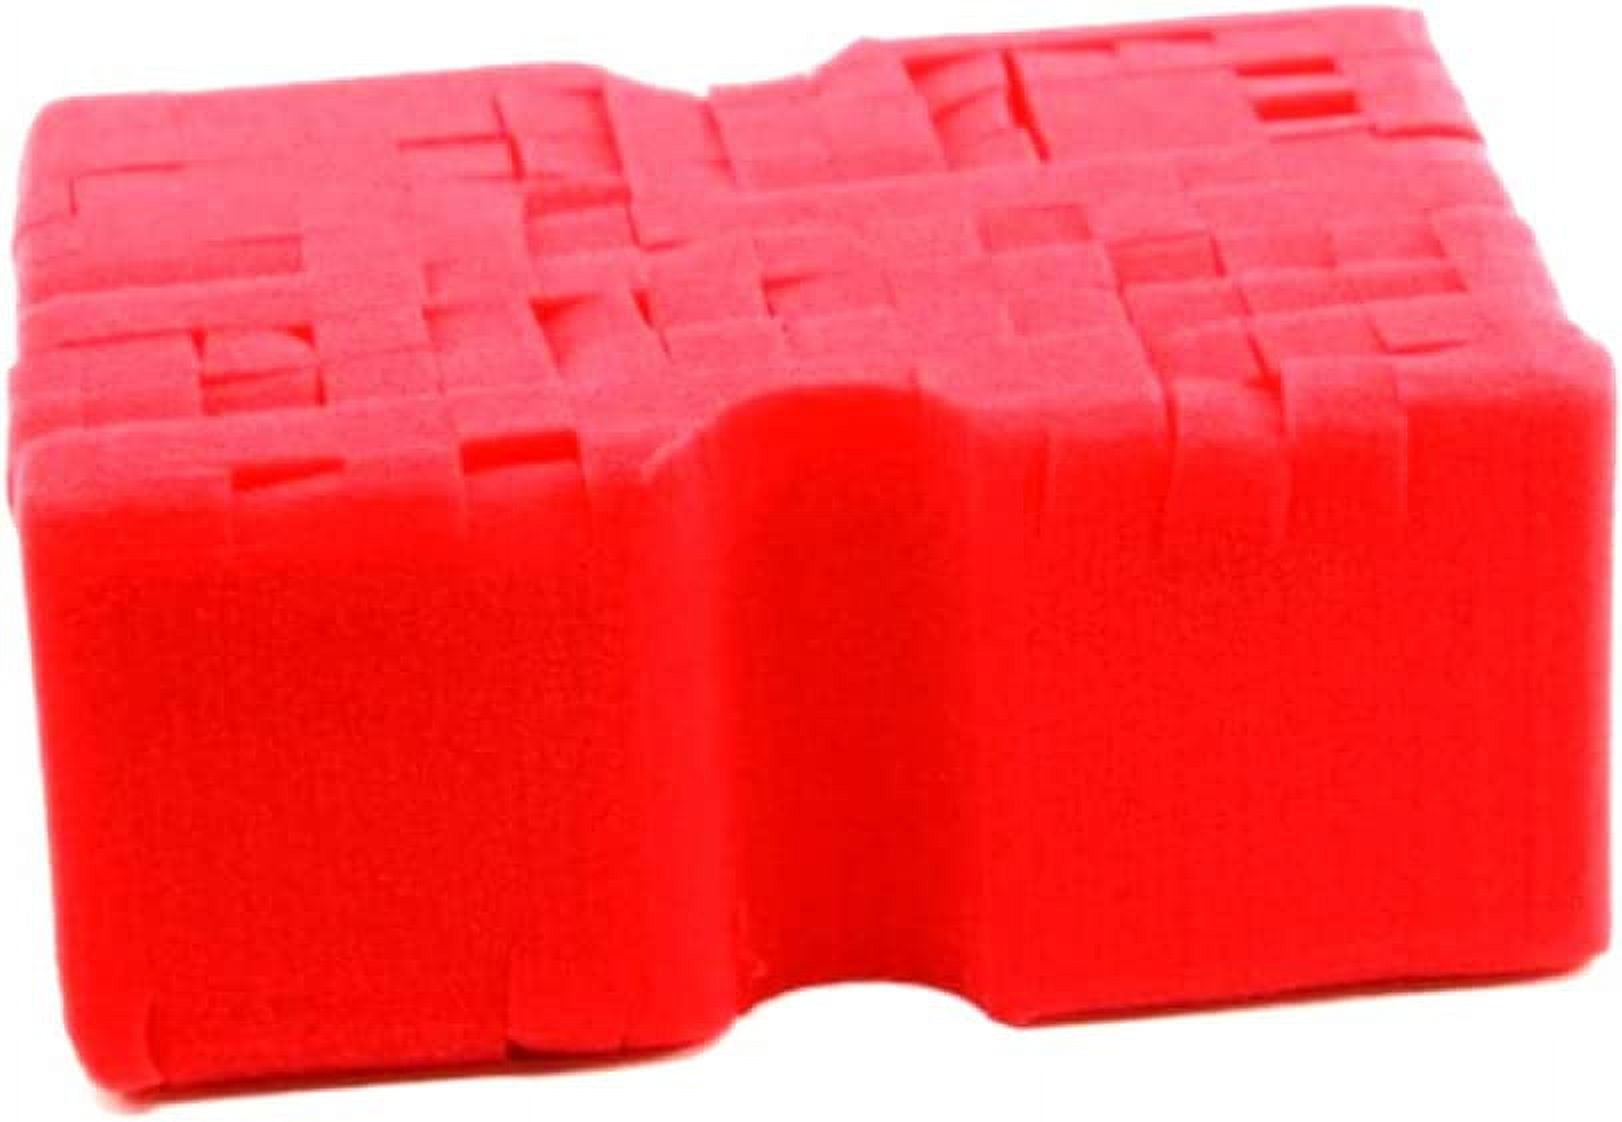 Optimum Big Red Sponge - Original BRS - Large Car Wash Sponge, Professional  Car Detailing Sponge, Great for Use with Rinseless Car Wash and